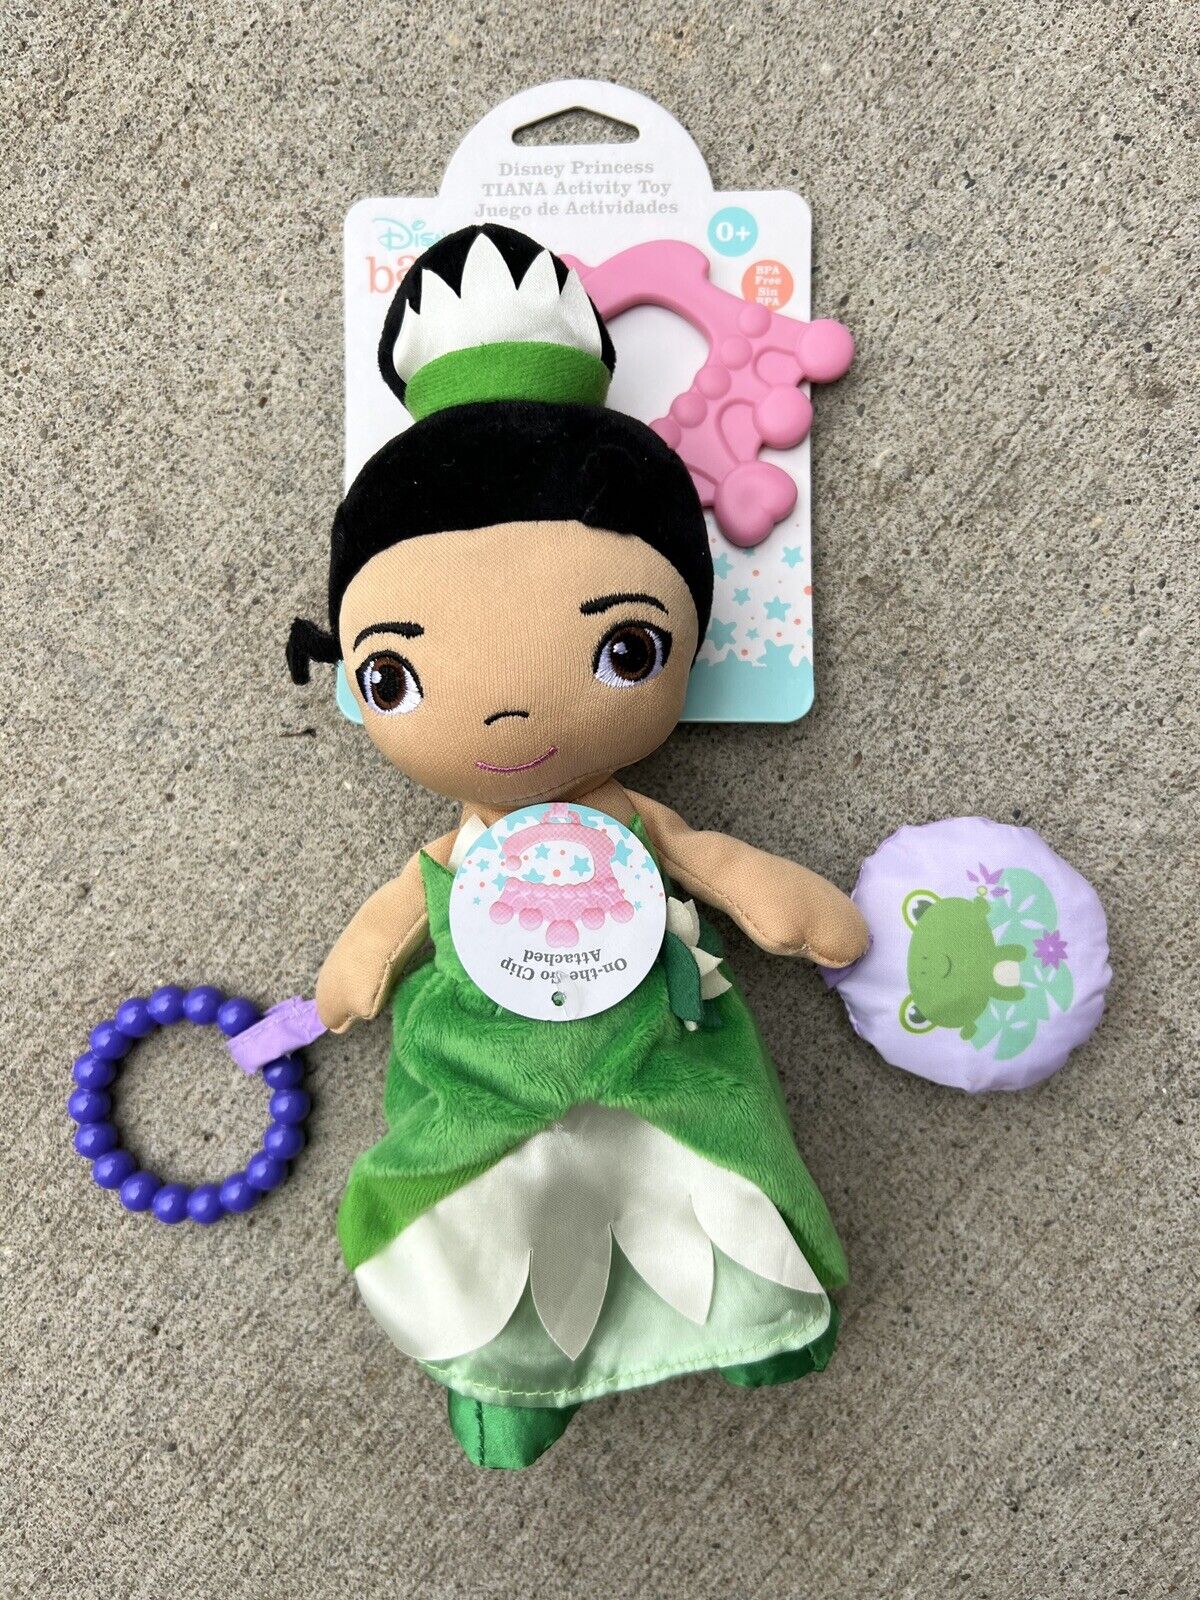 New Disney Princess Baby Tiana Activity Toy Doll Plush 11\